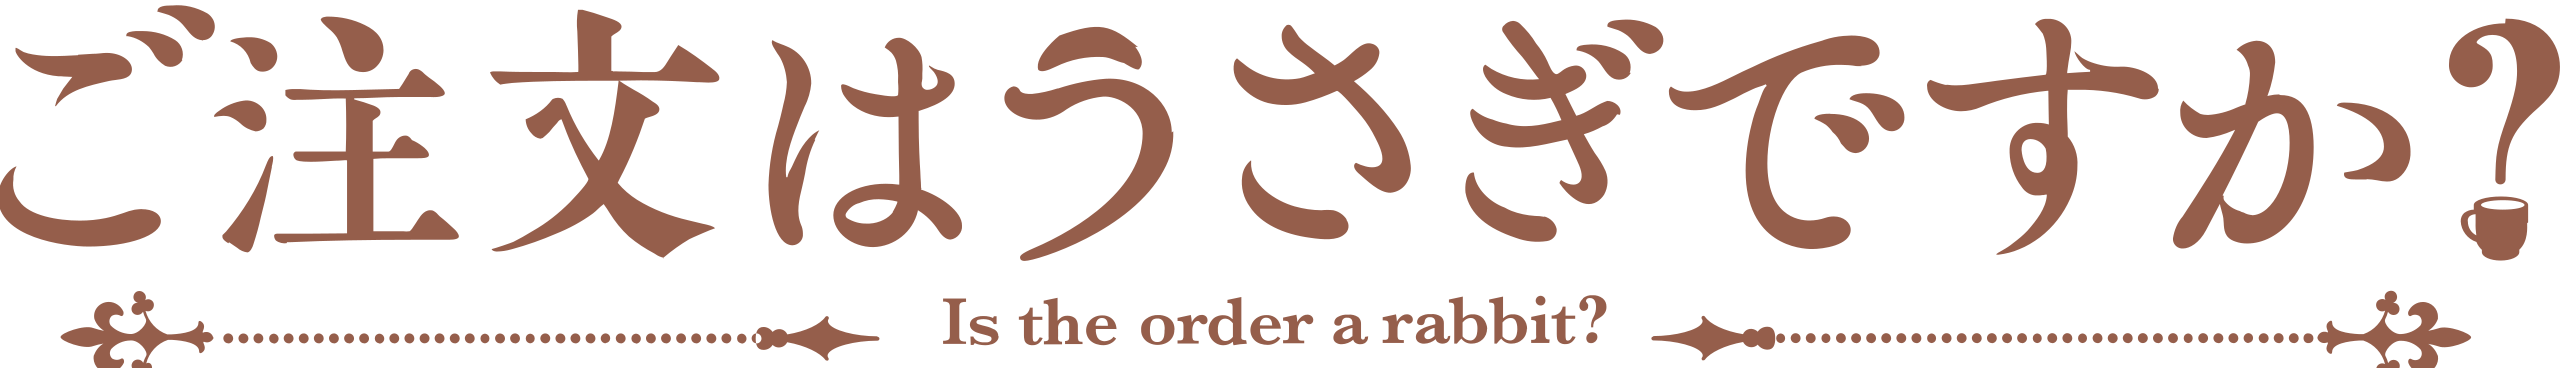 https://img.online-otaku.nl/logo/series/2323232310102222033108_6535241ce84d32_87558564_Is_the_Order_a_Rabbit__Logo.svg.png